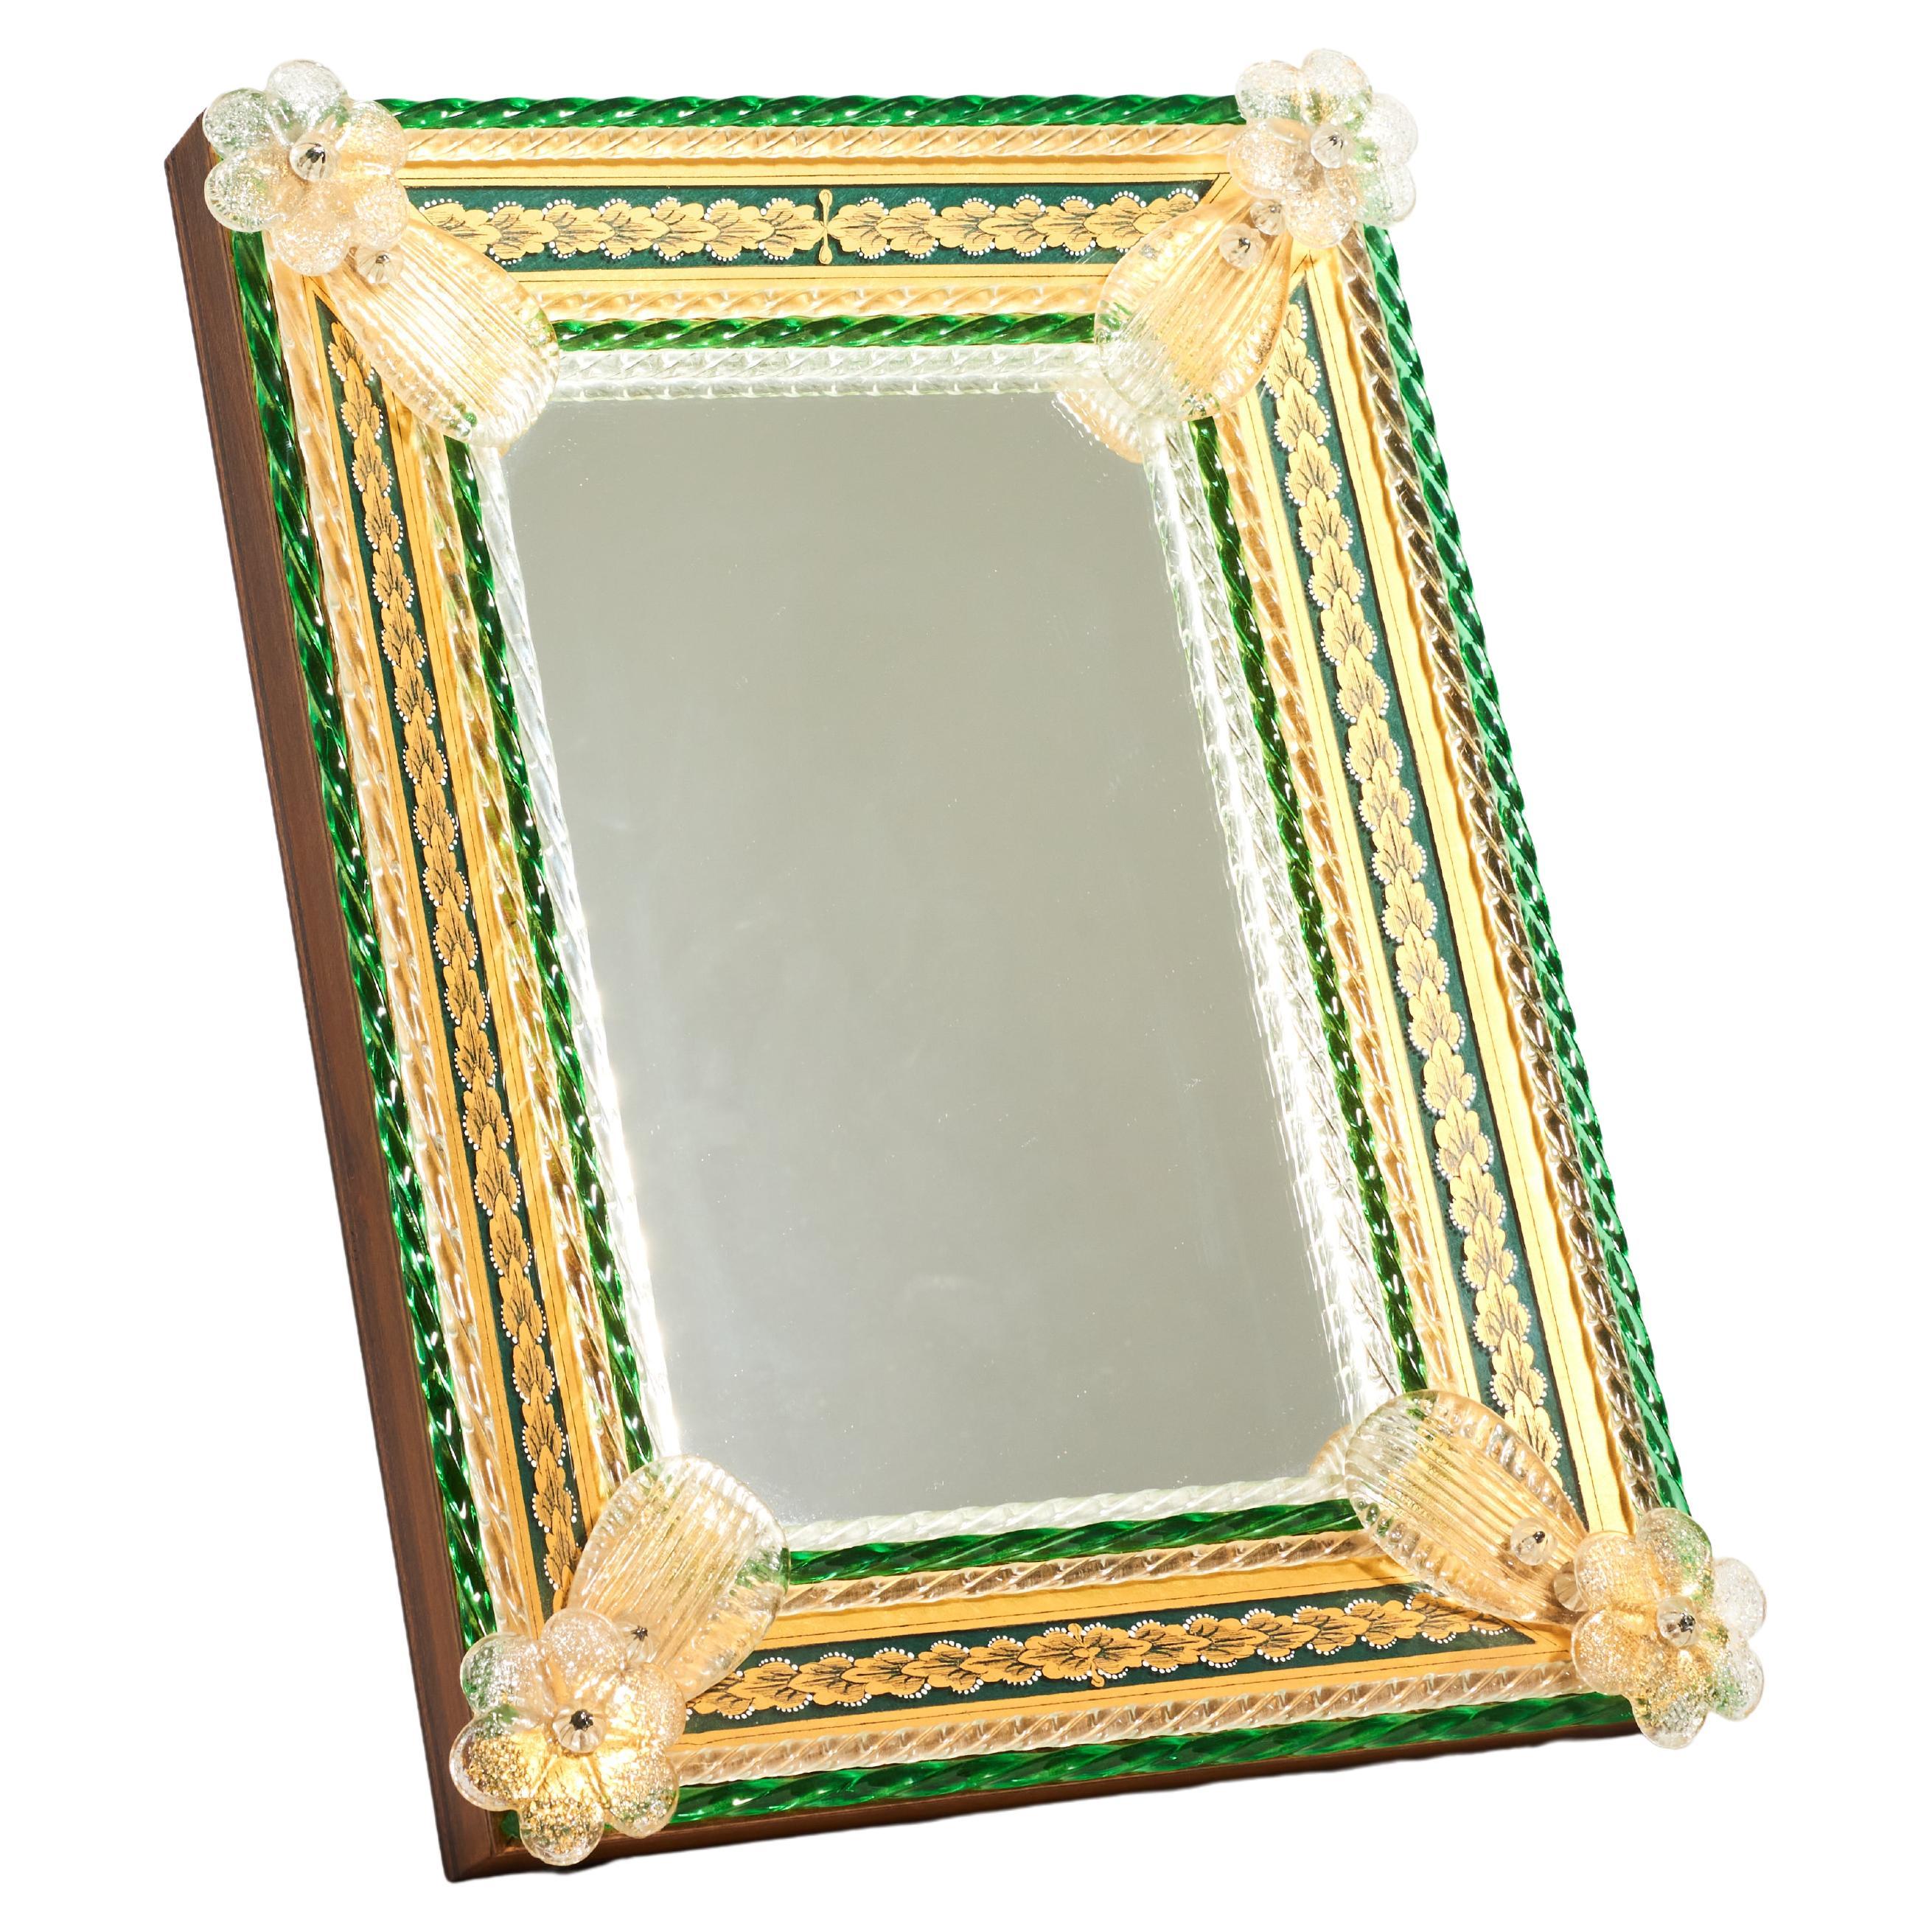 Venetian Glass Decorative Framed Mirror